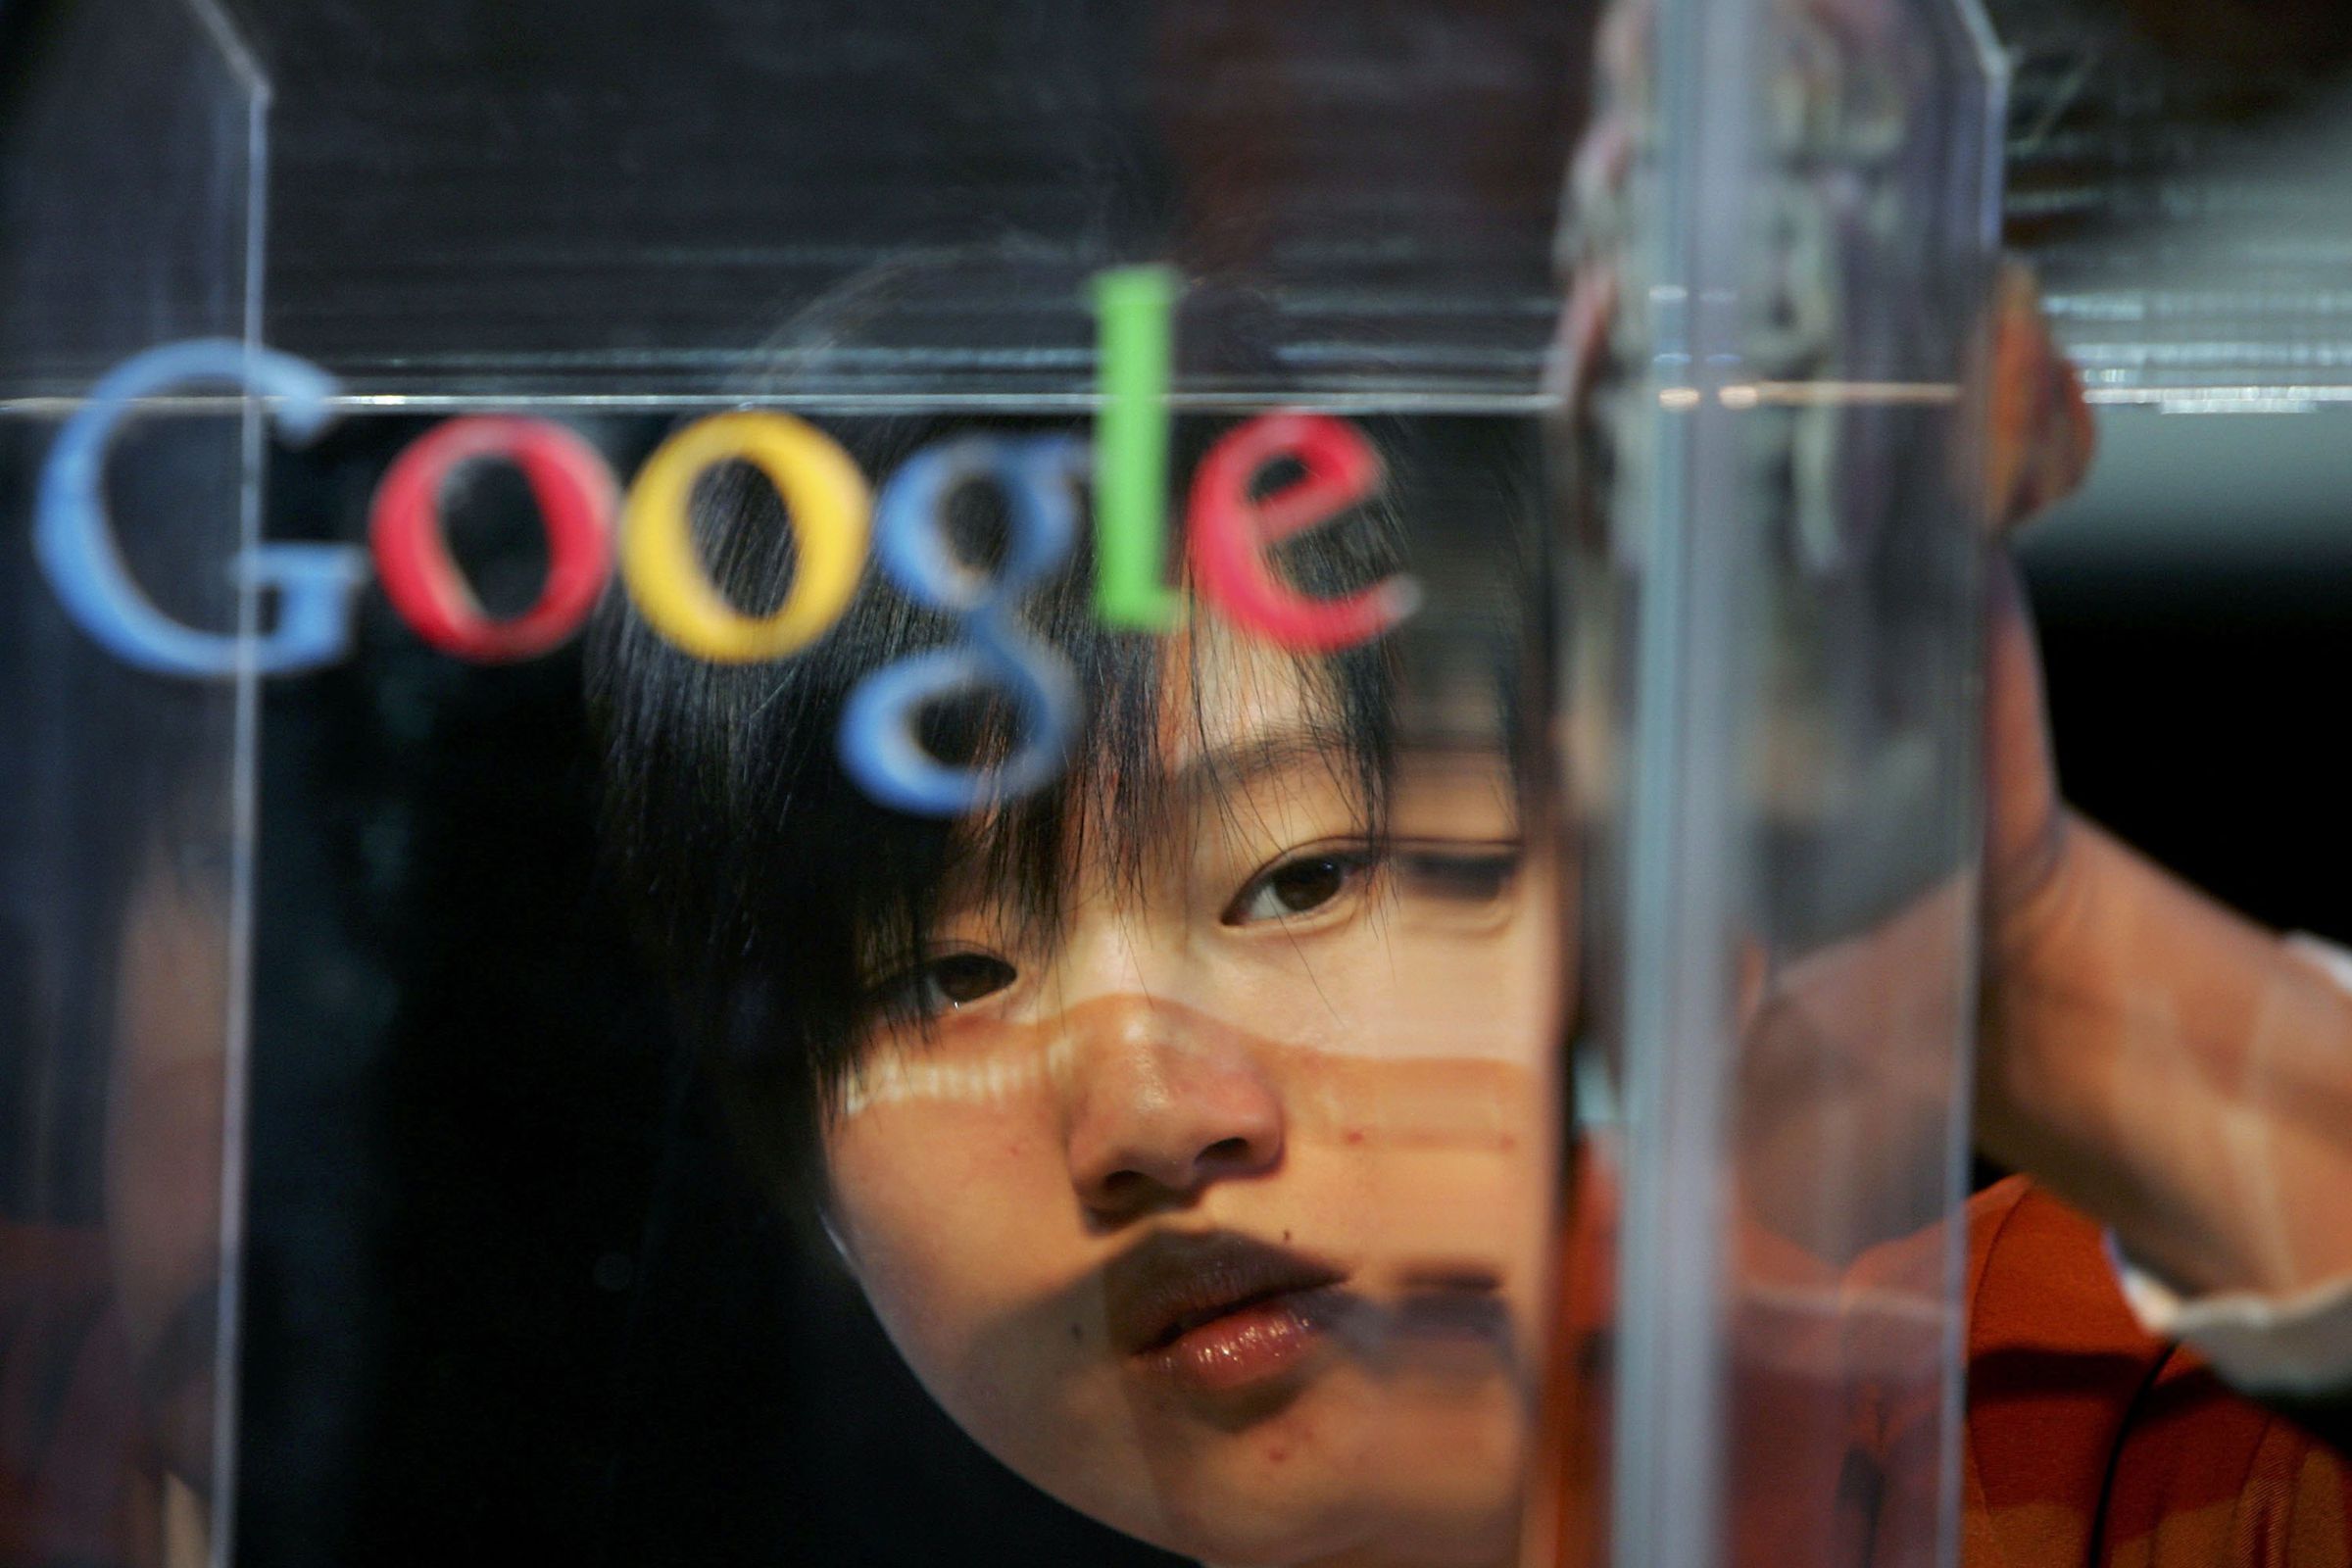 Google Announce New Brand Name 'Gu Ge' In Beijing